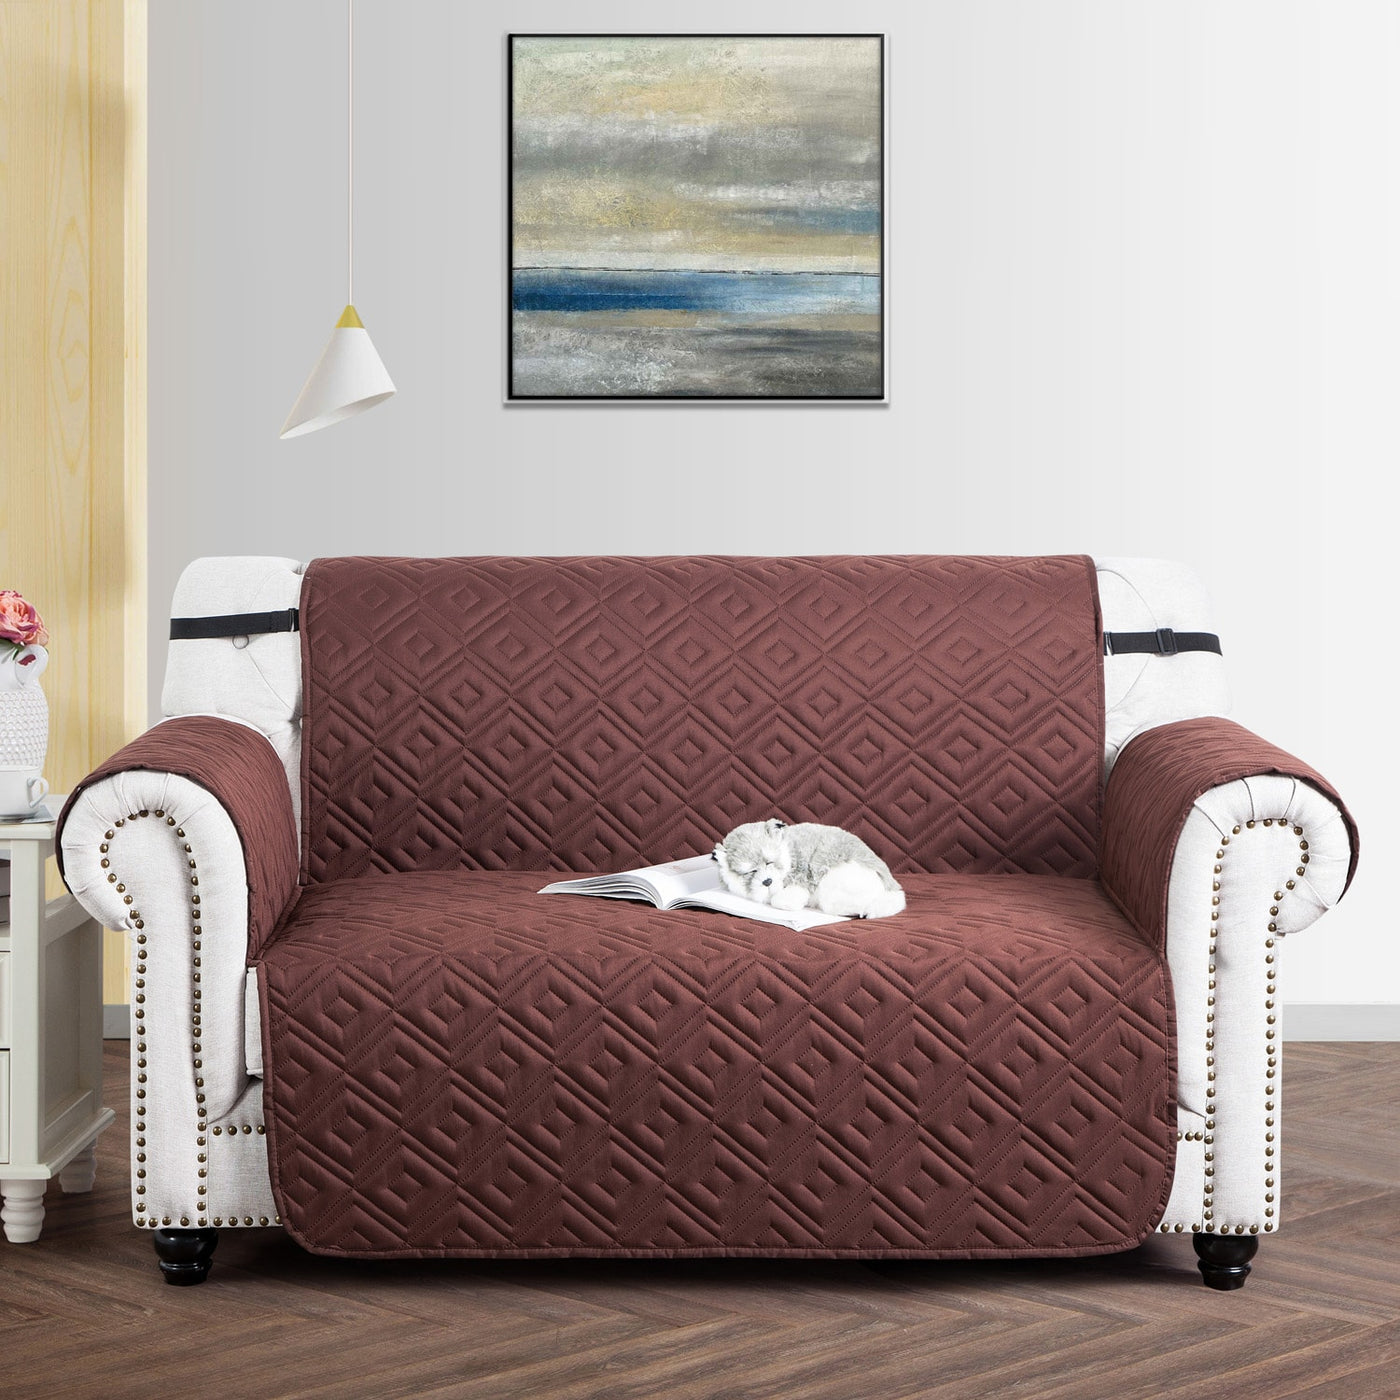 waterproof sofa cover in brown